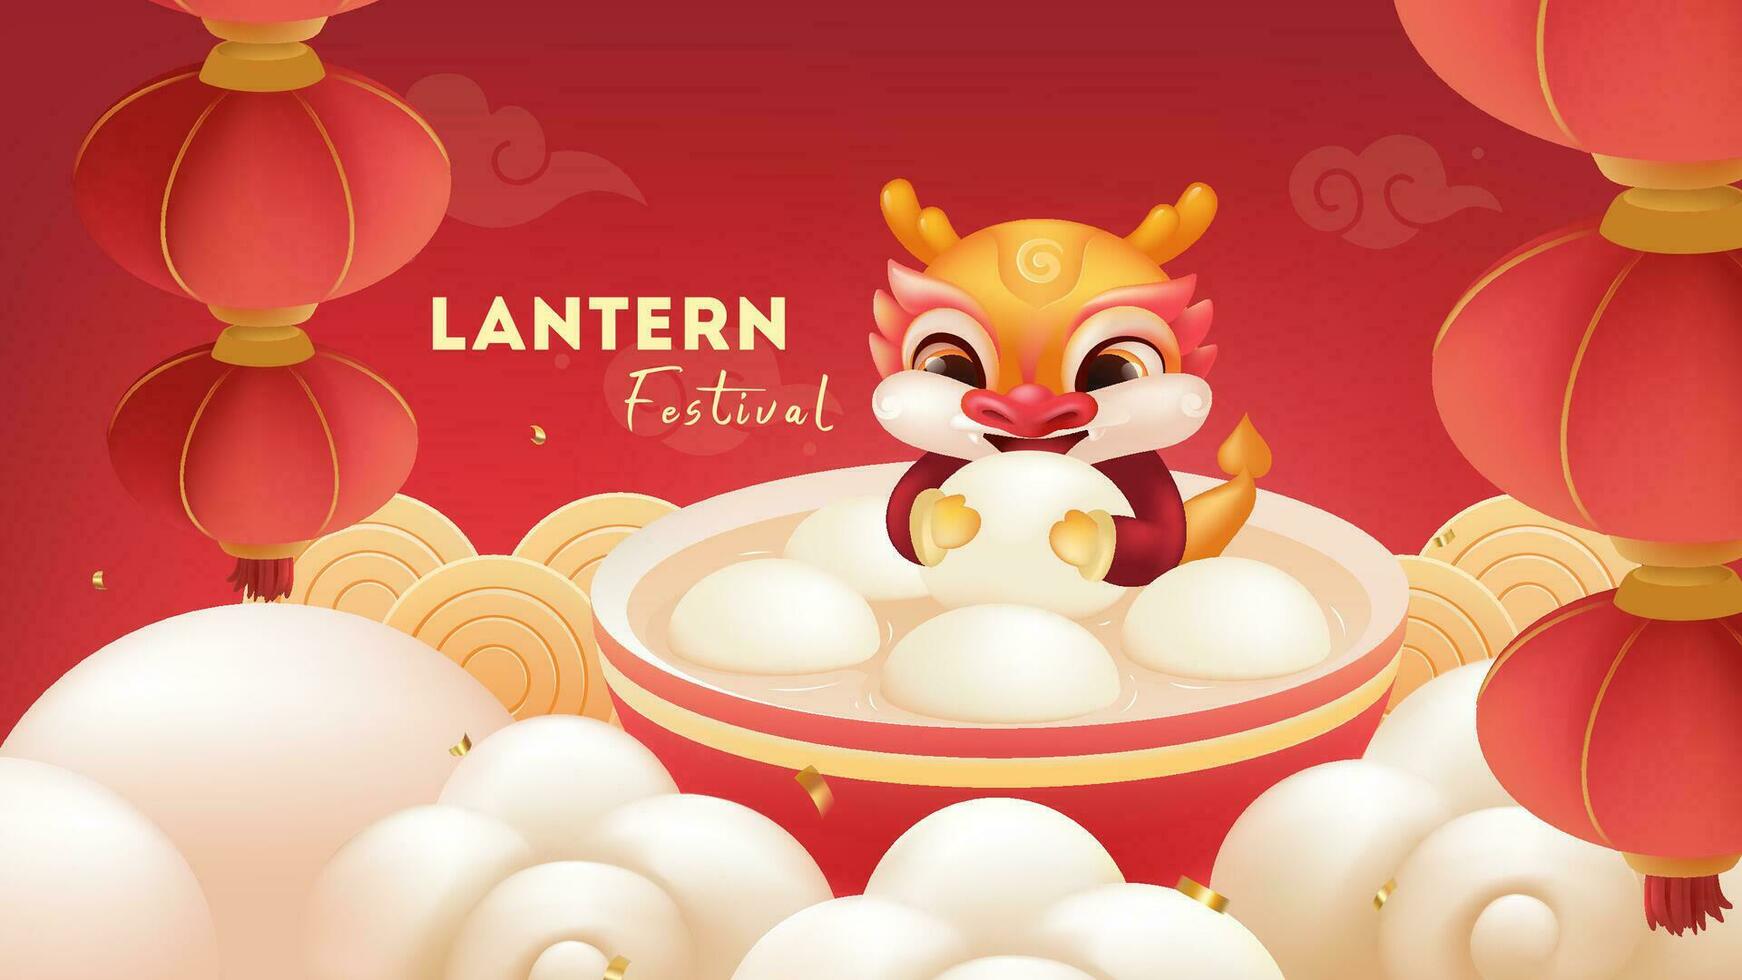 Lantern Festival background design cute dragon eating glutinous rice balls in a bowl vector